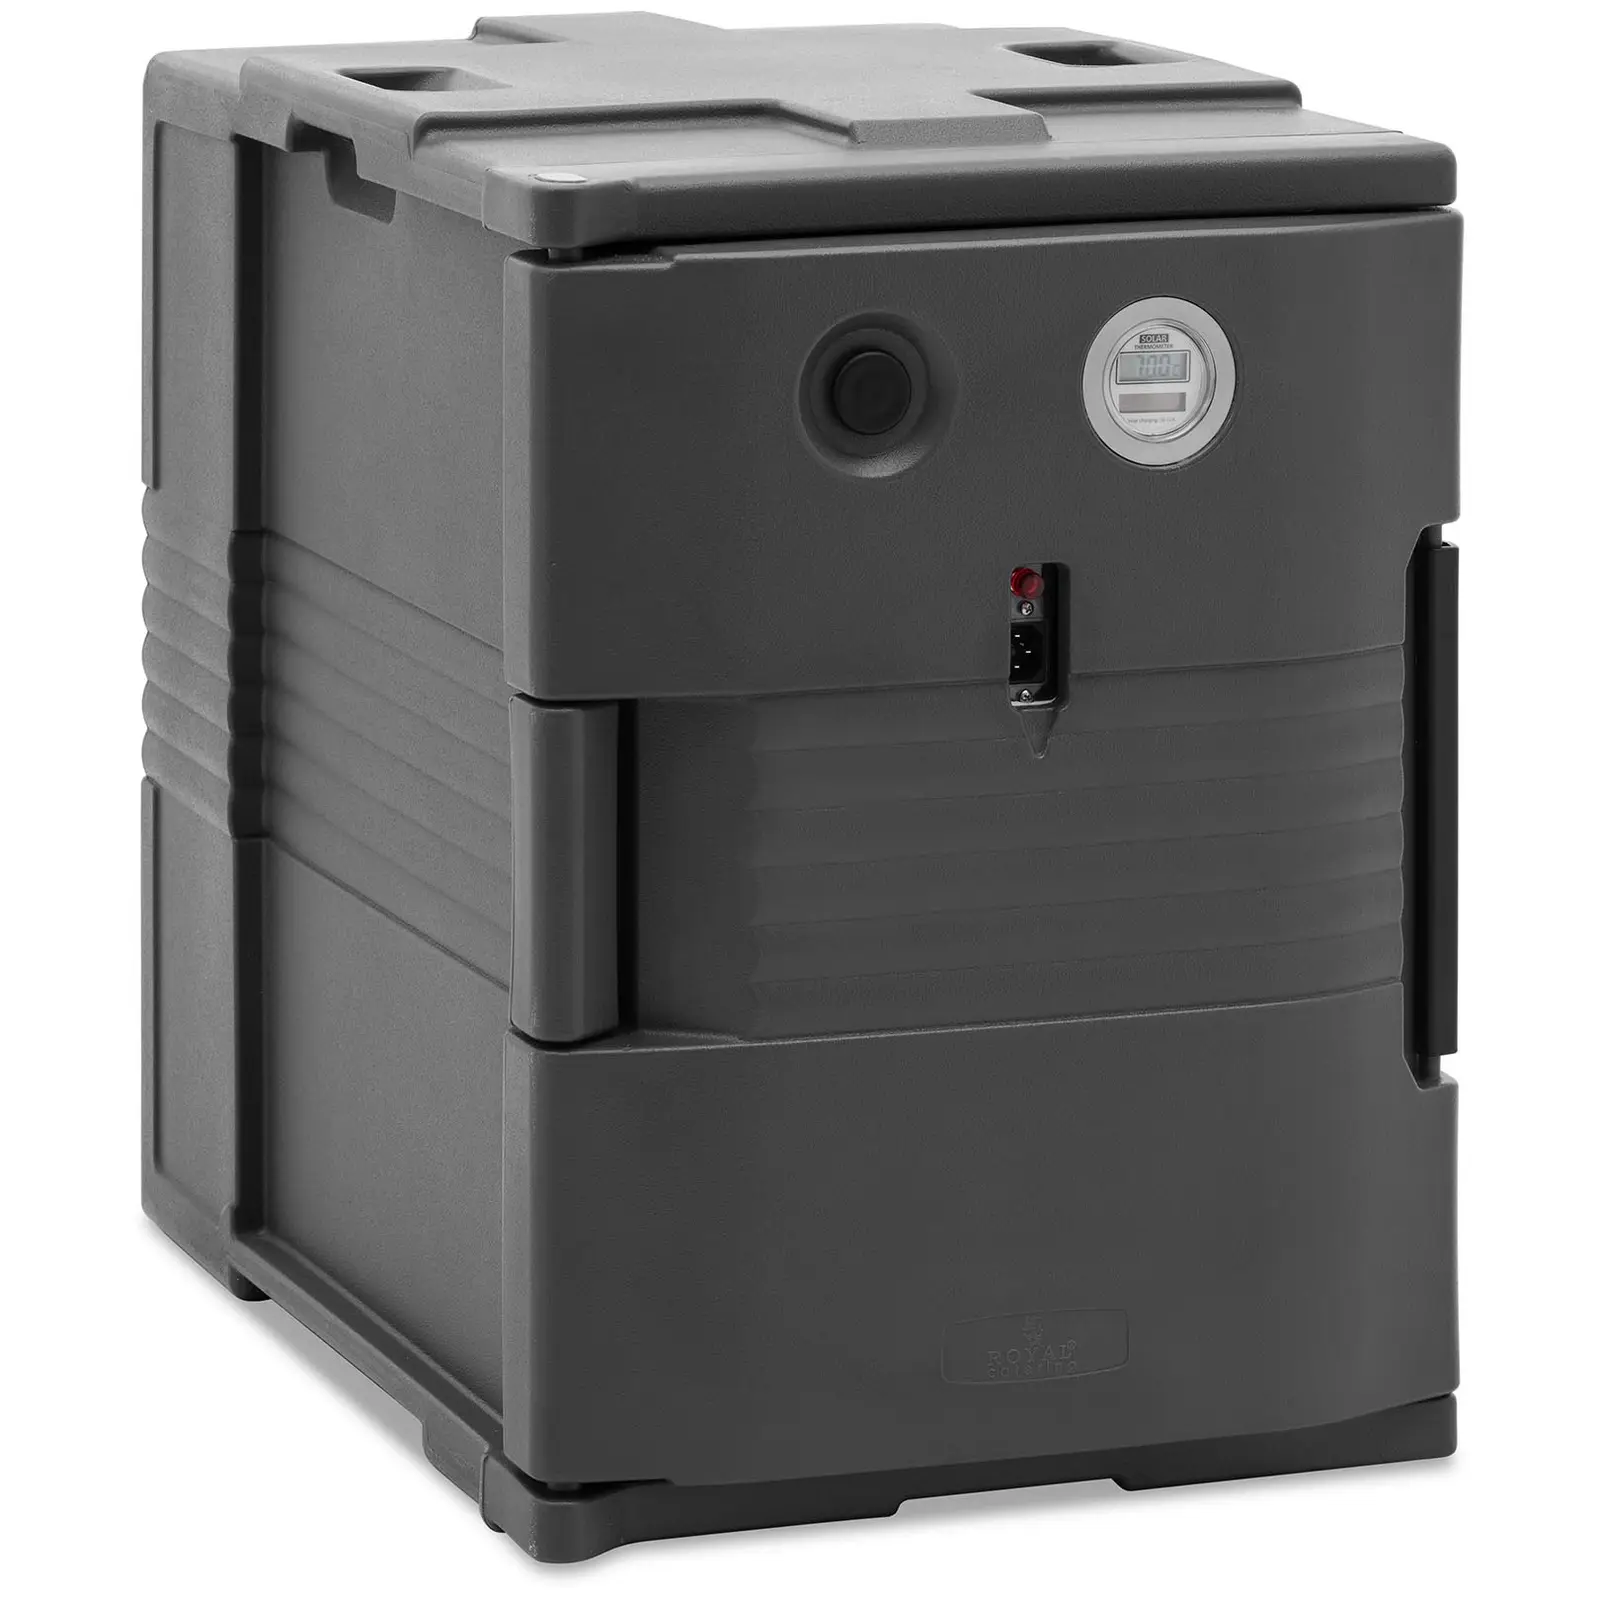 Thermobox calentado - 90 L - para contenedores GN 1/1 - cargador frontal - con indicador de temperatura